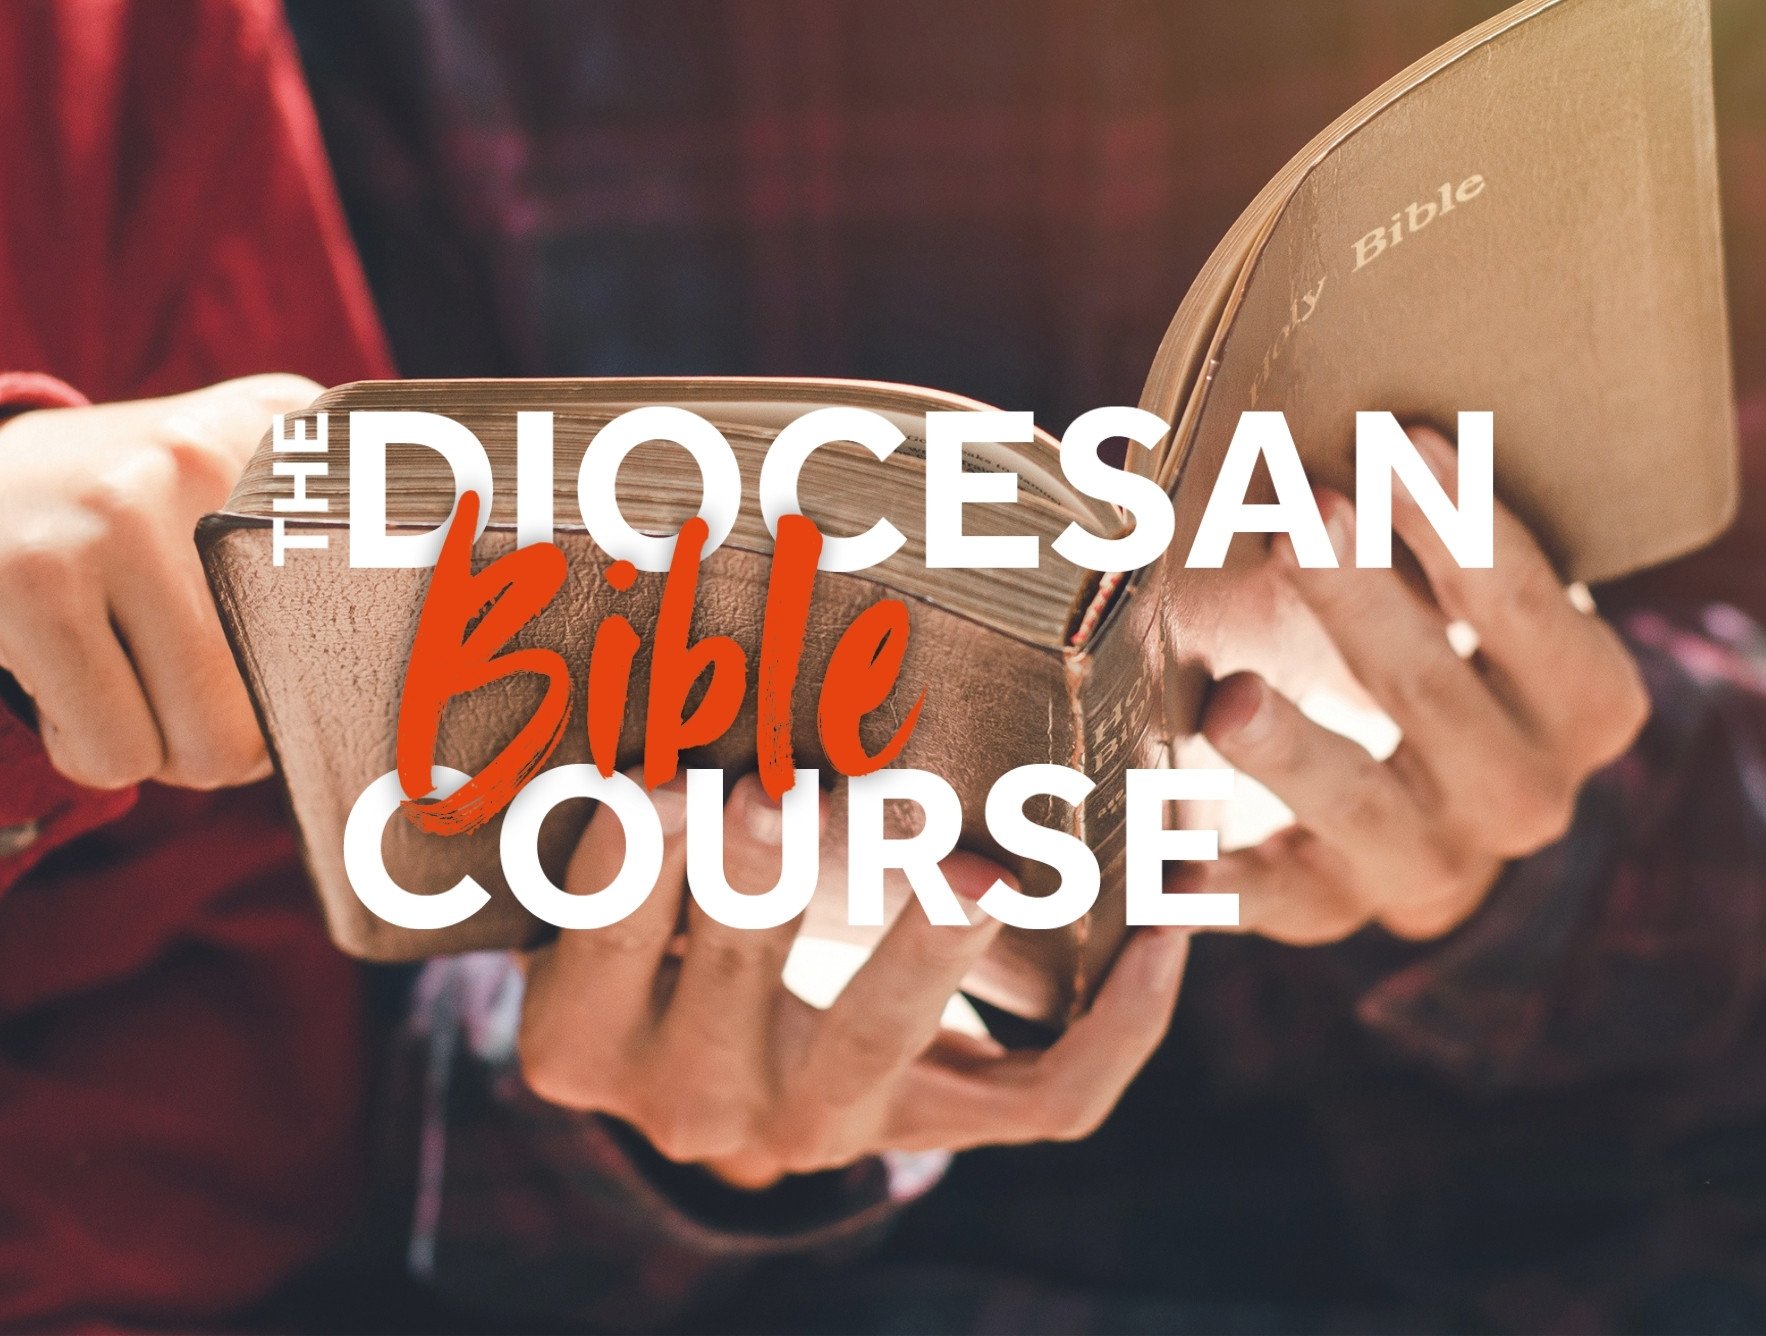 Diocesan Bible Course